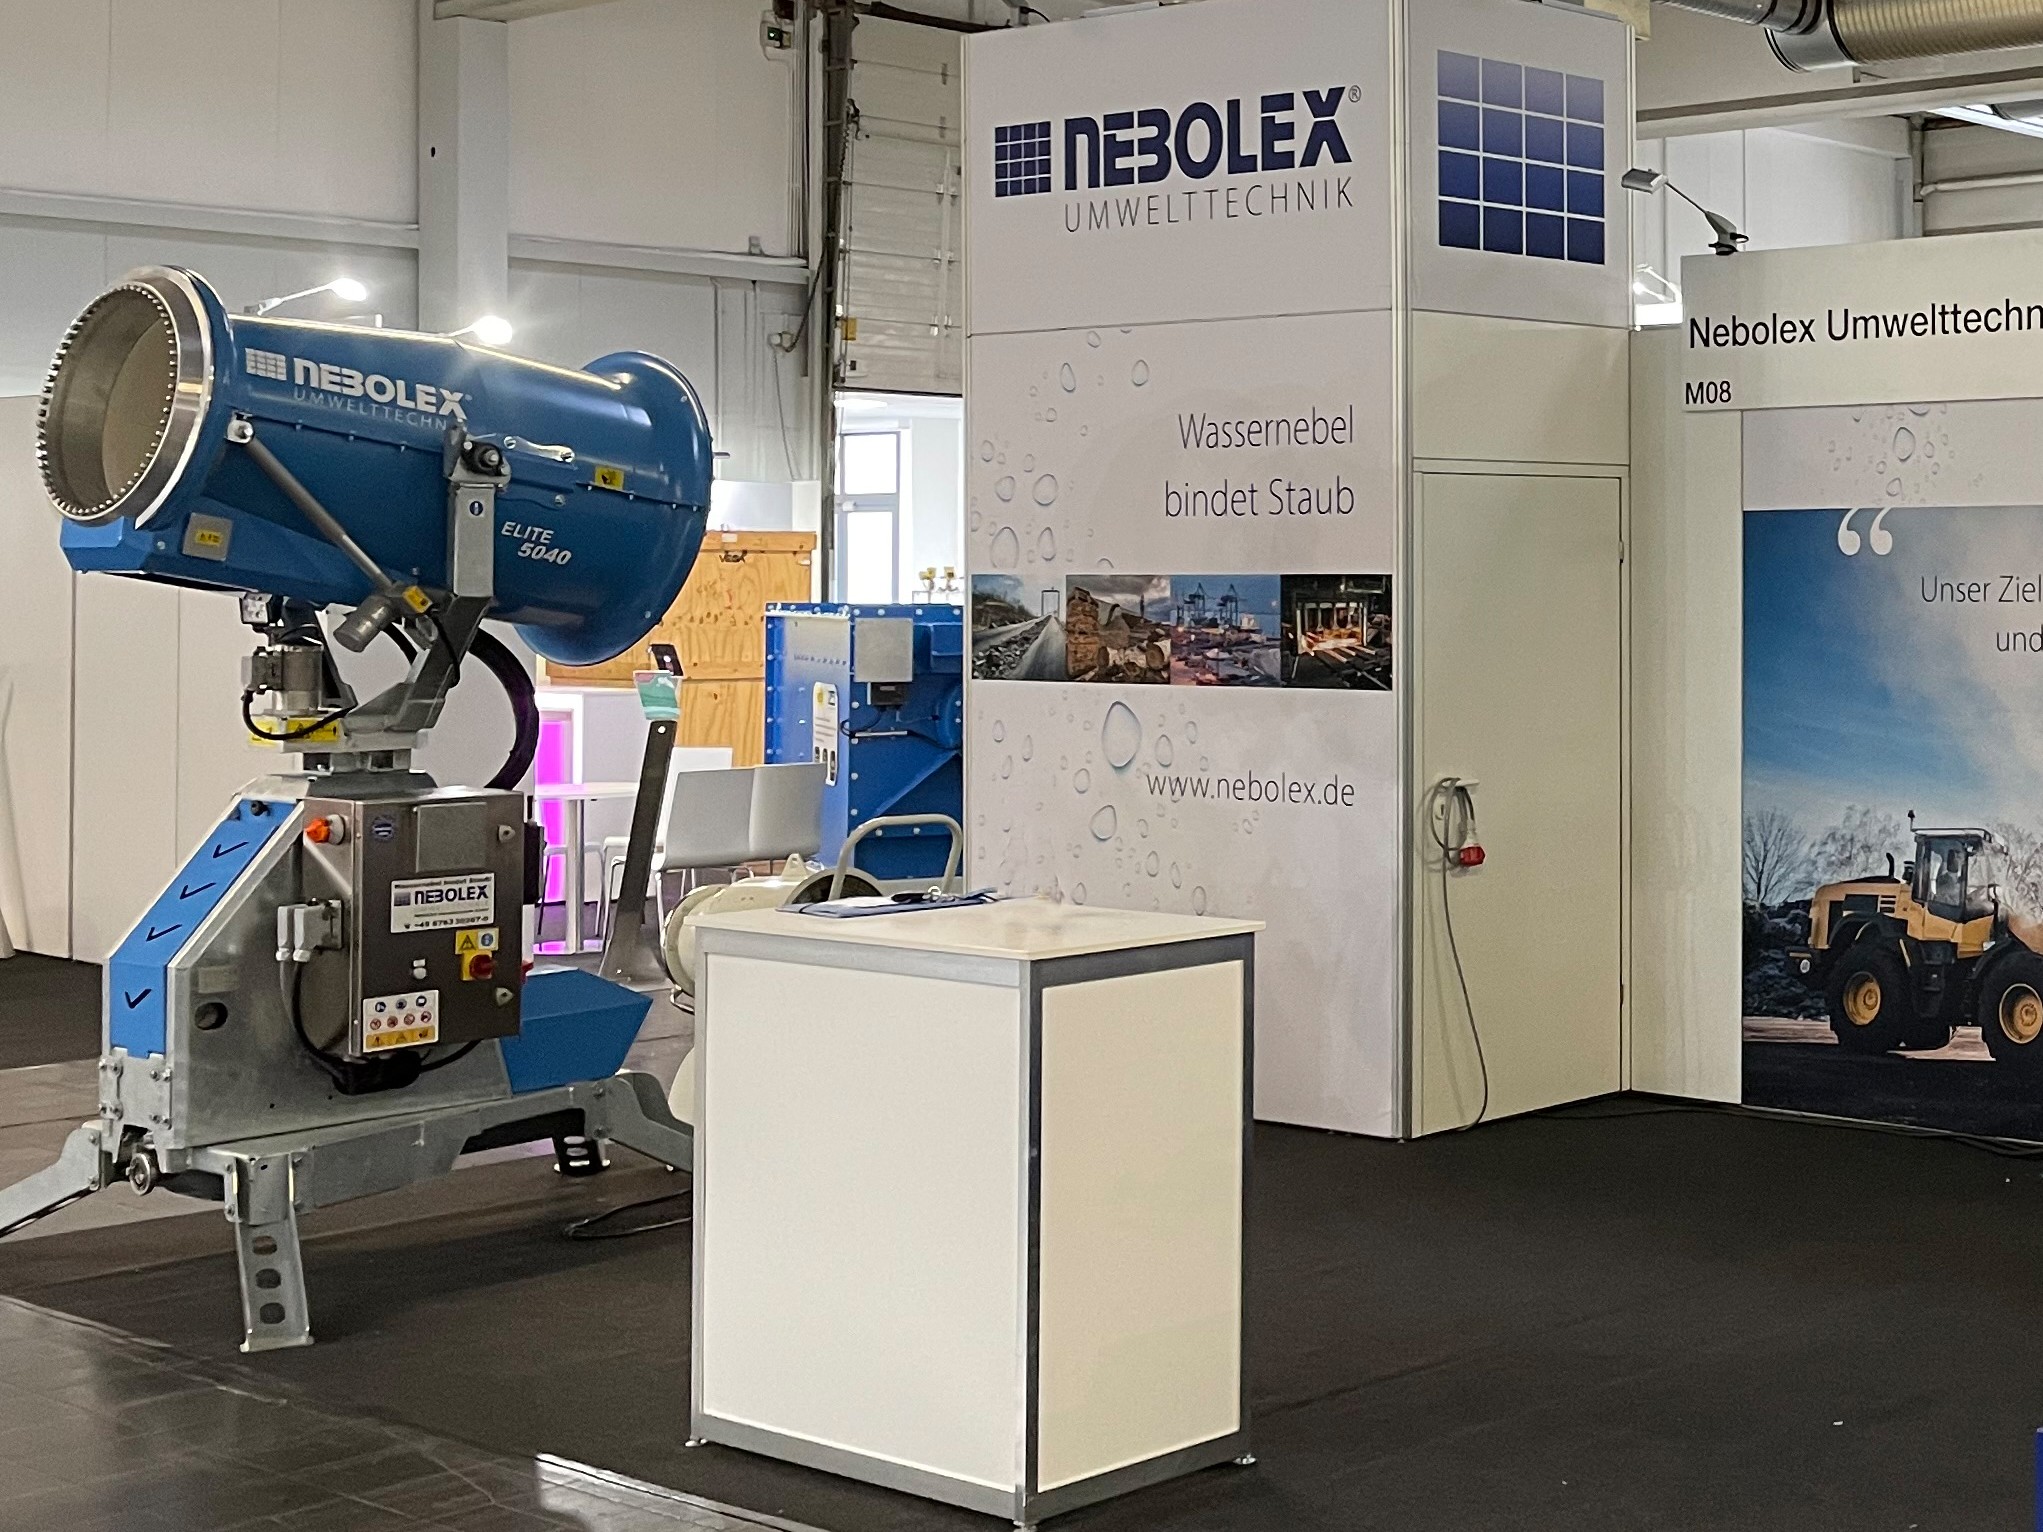 Dust binding machine at the Nebolex Umwelttechnik trade fair stand in Munich